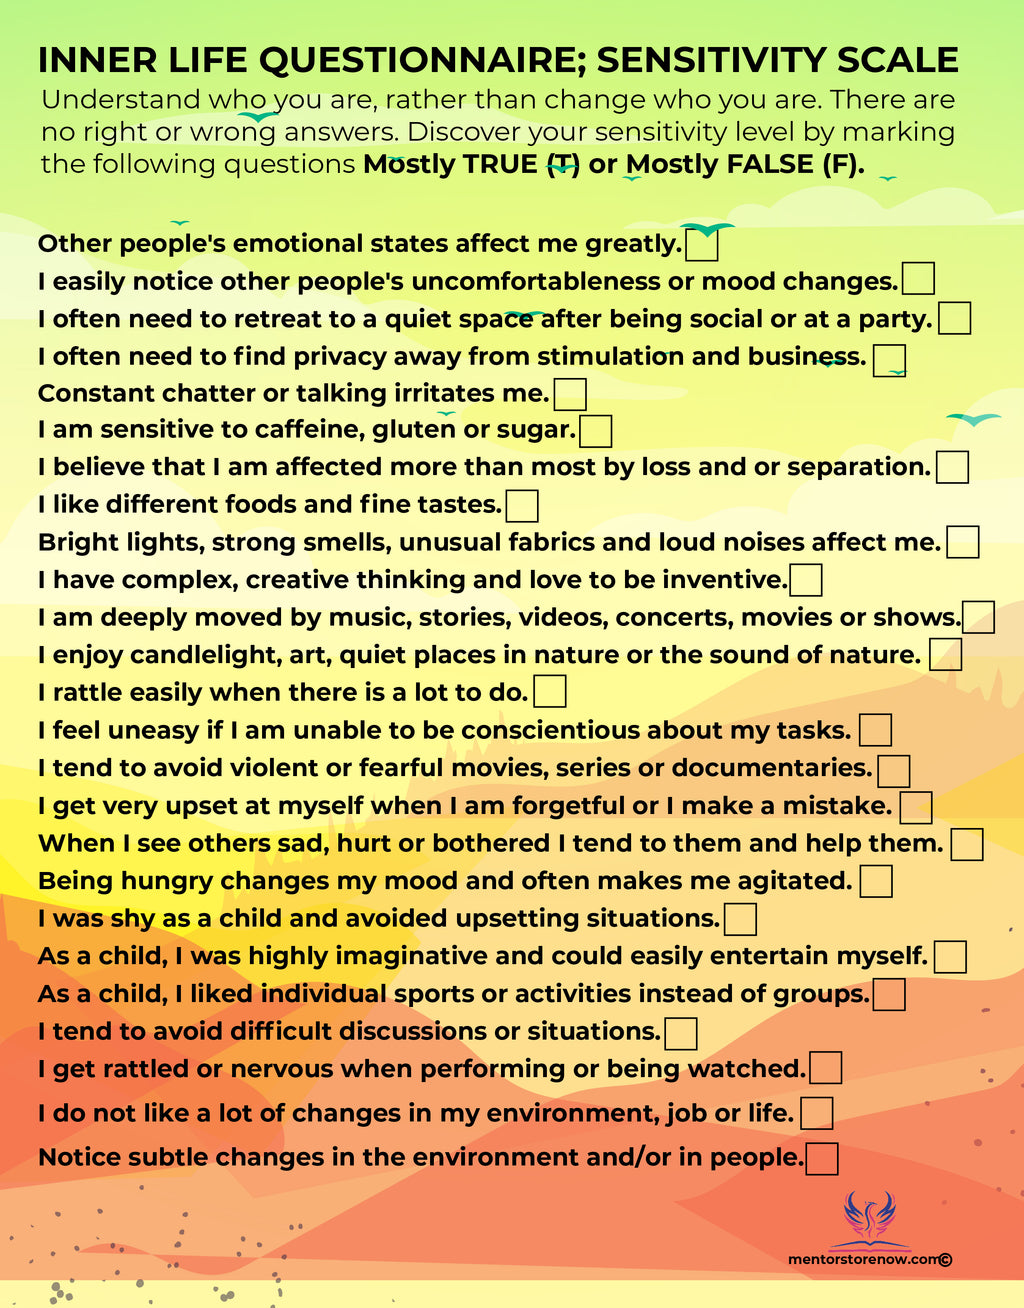 Inner Life Questionnaire / Sensitivity Scale